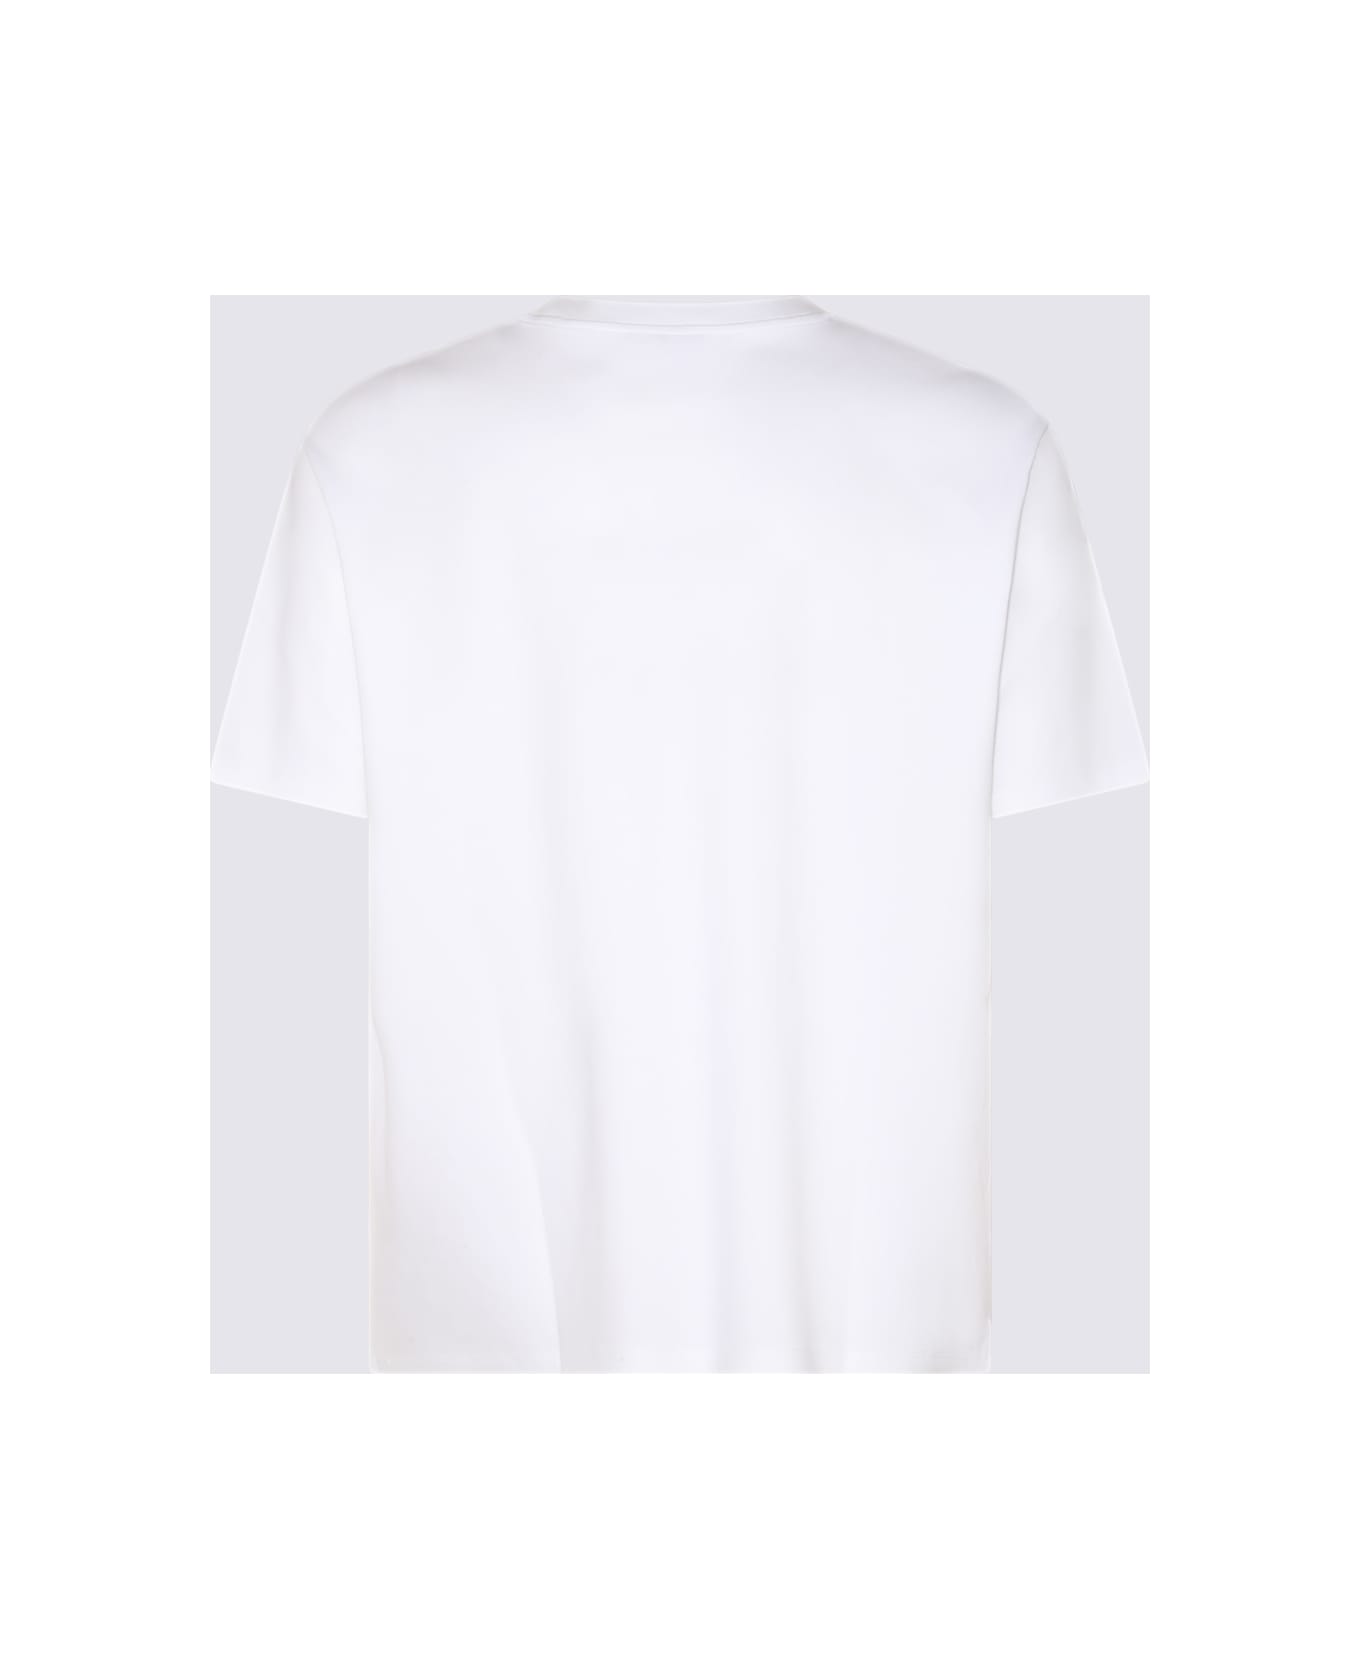 Lanvin White Cotton T-shirt - White シャツ